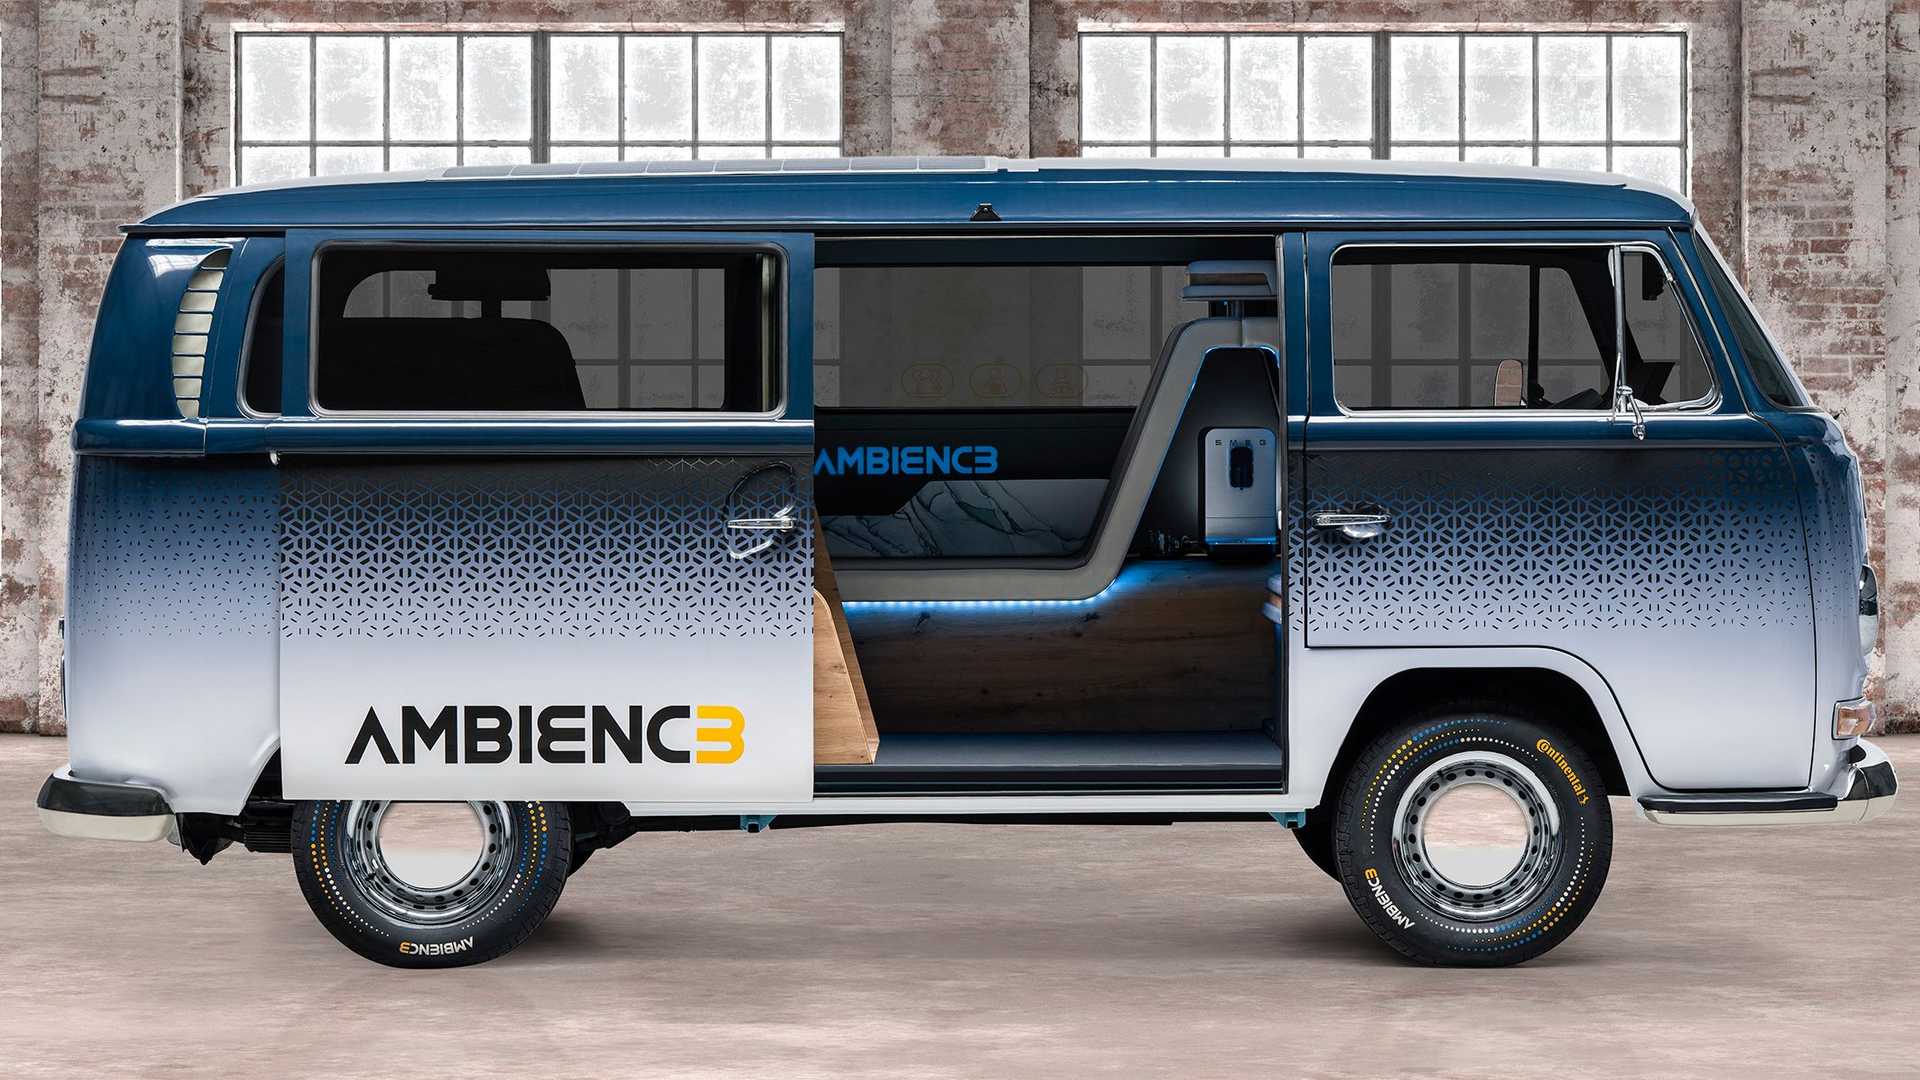 Continental AmbienC3 iç konseptine merhaba deyin!